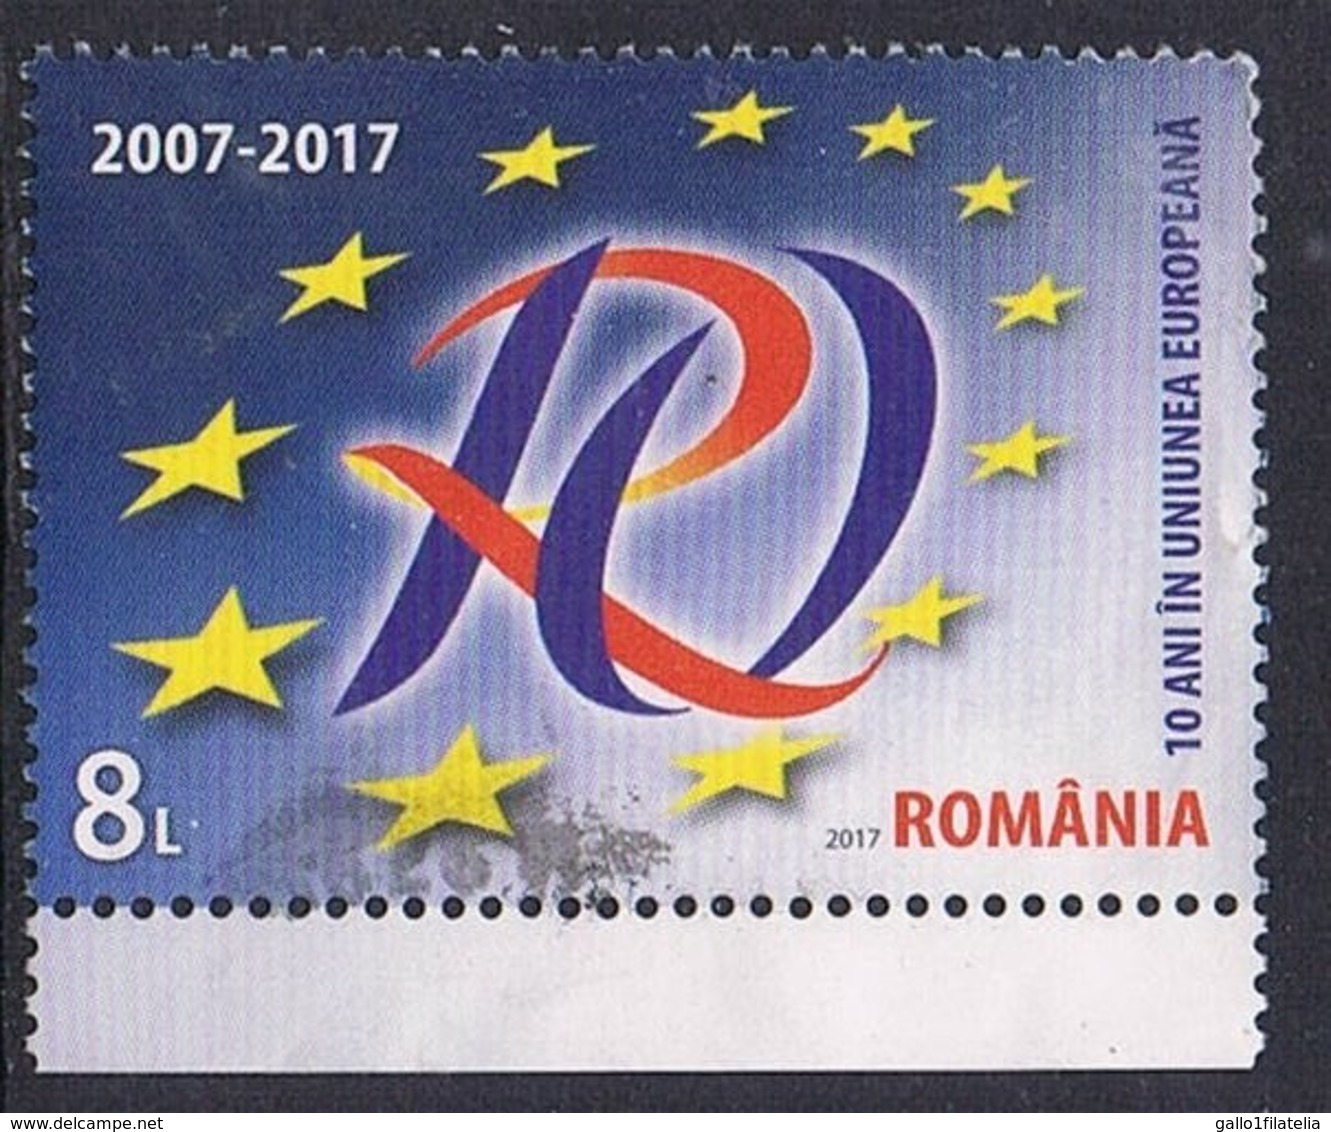 2017 - ROMANIA - 10 ANNI NELL'UNIONE EUROPEA / 10 YEARS IN THE EUROPEAN UNION. USATO / USED. - Used Stamps